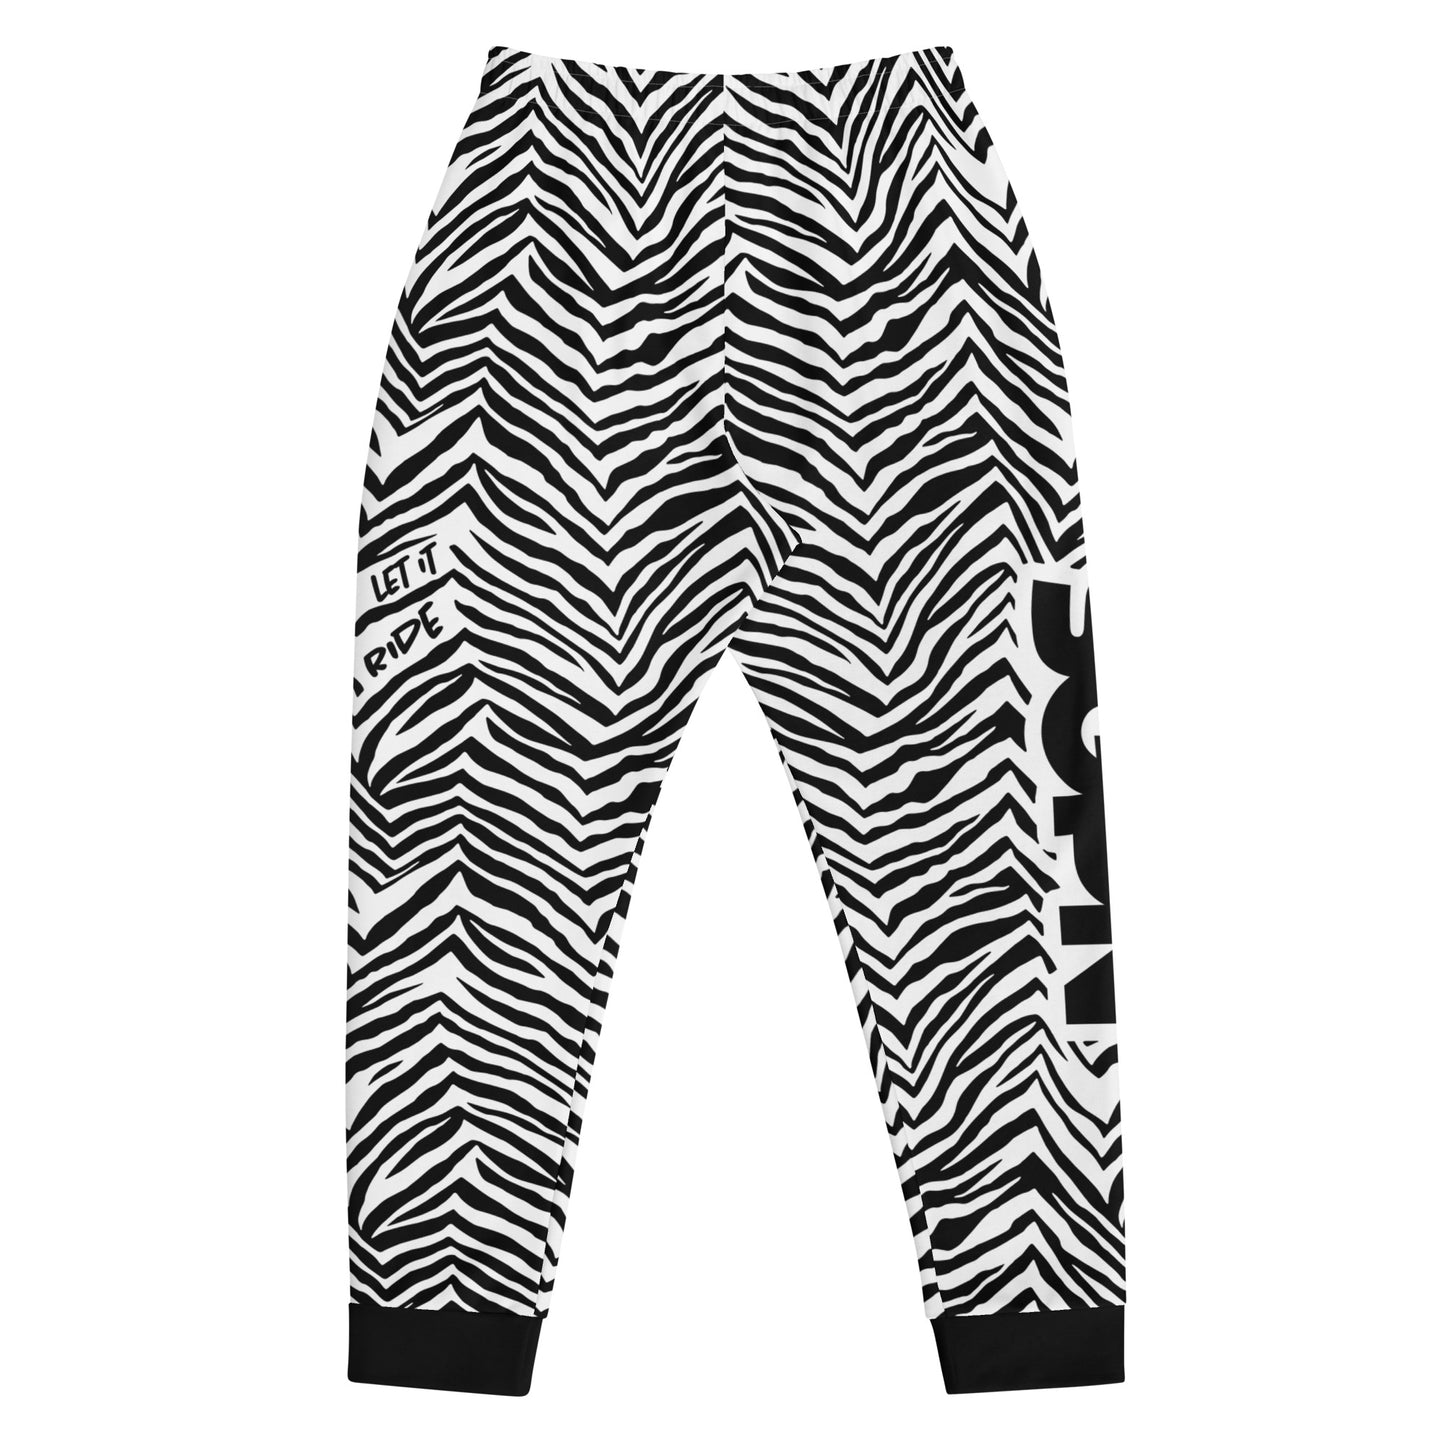 SGPN - Let it Ride - Zebra Stripe Men's Joggers (Black)